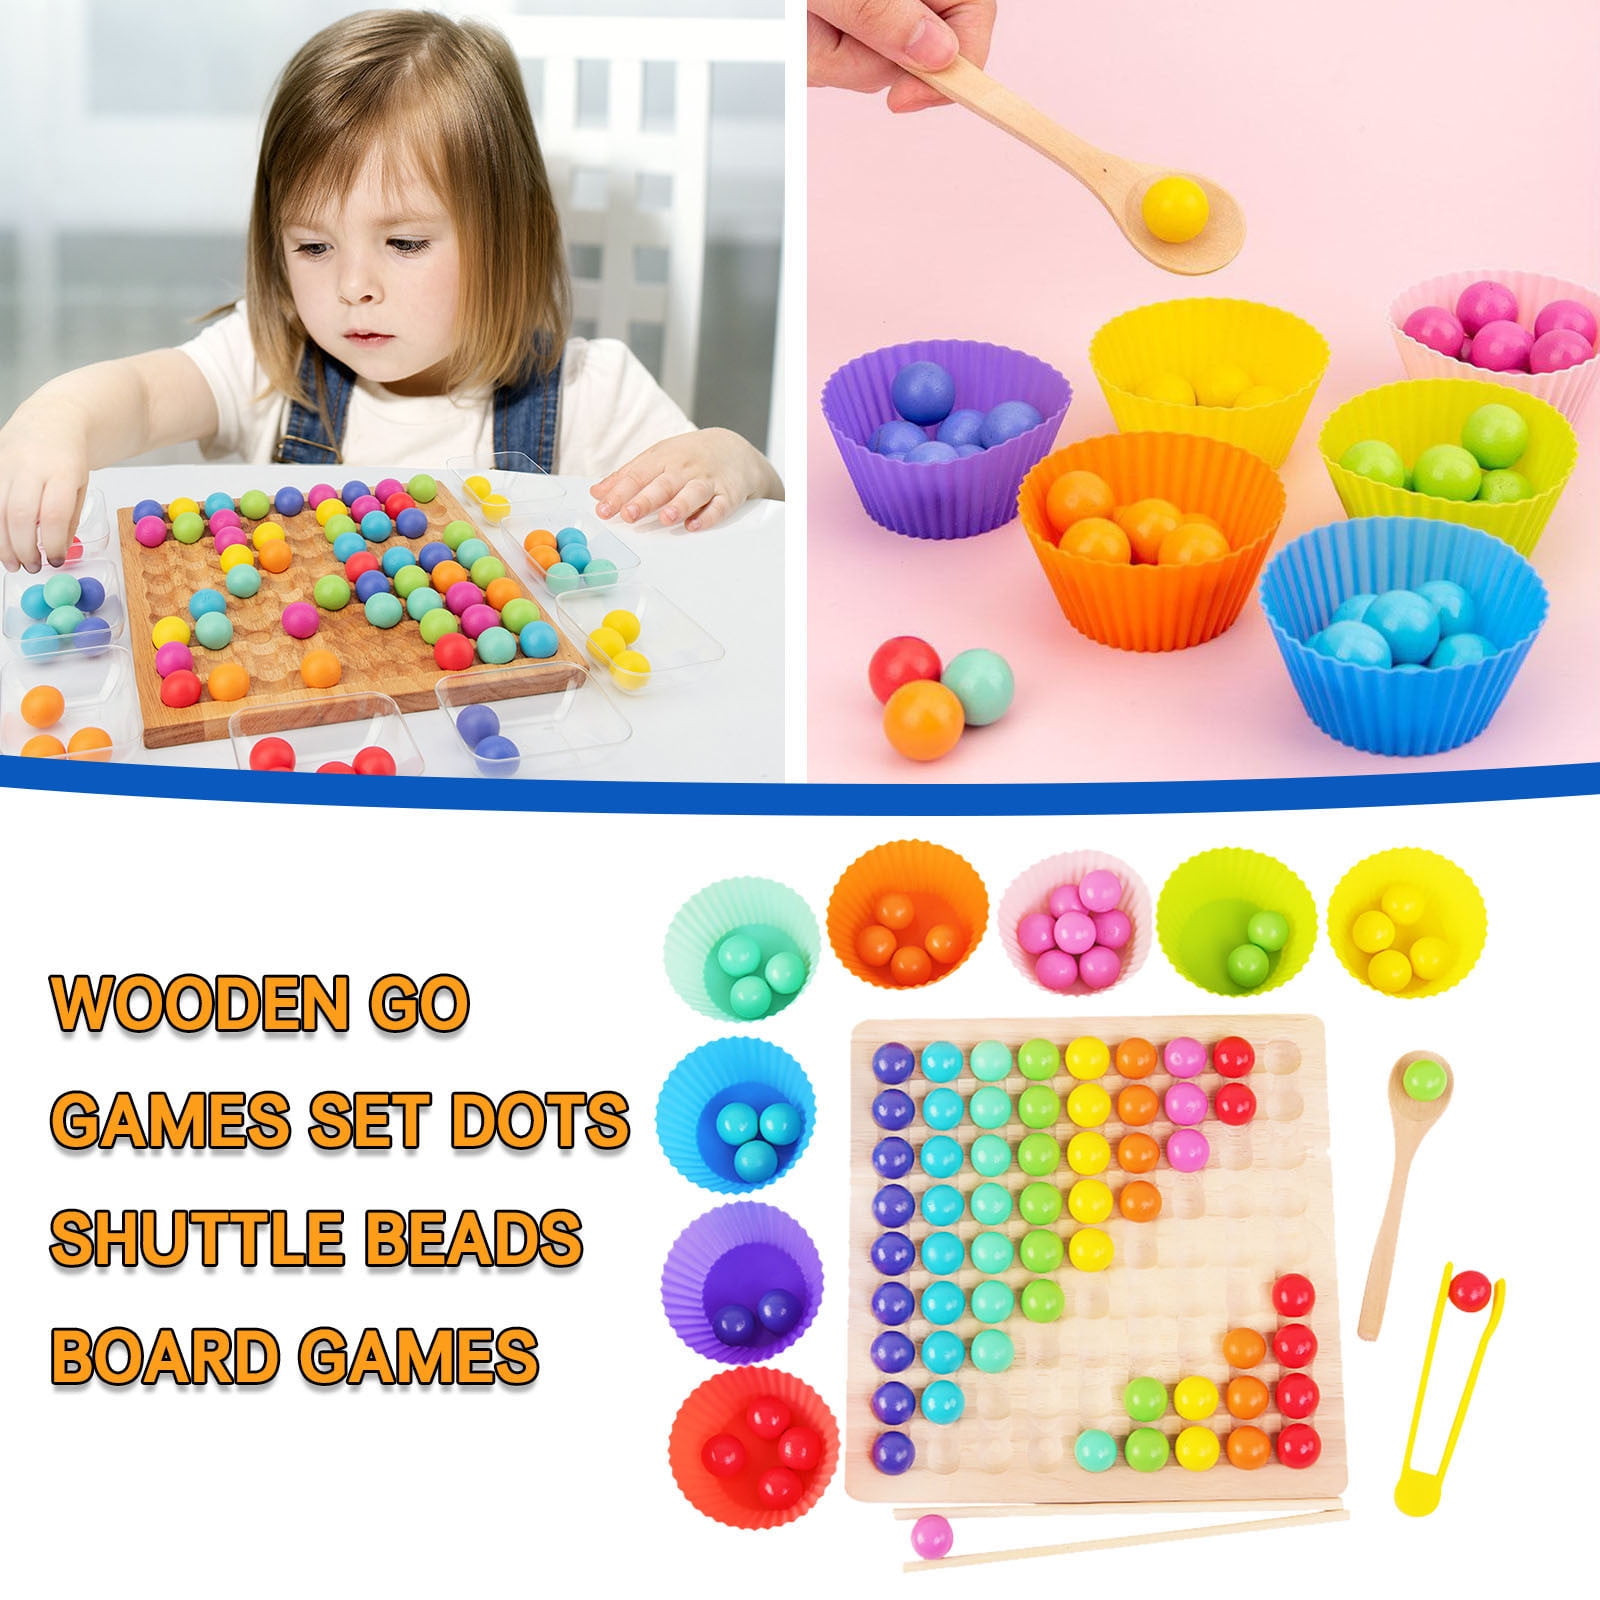 Wooden Go Games Set Dots Shuttle Beads Board Games 